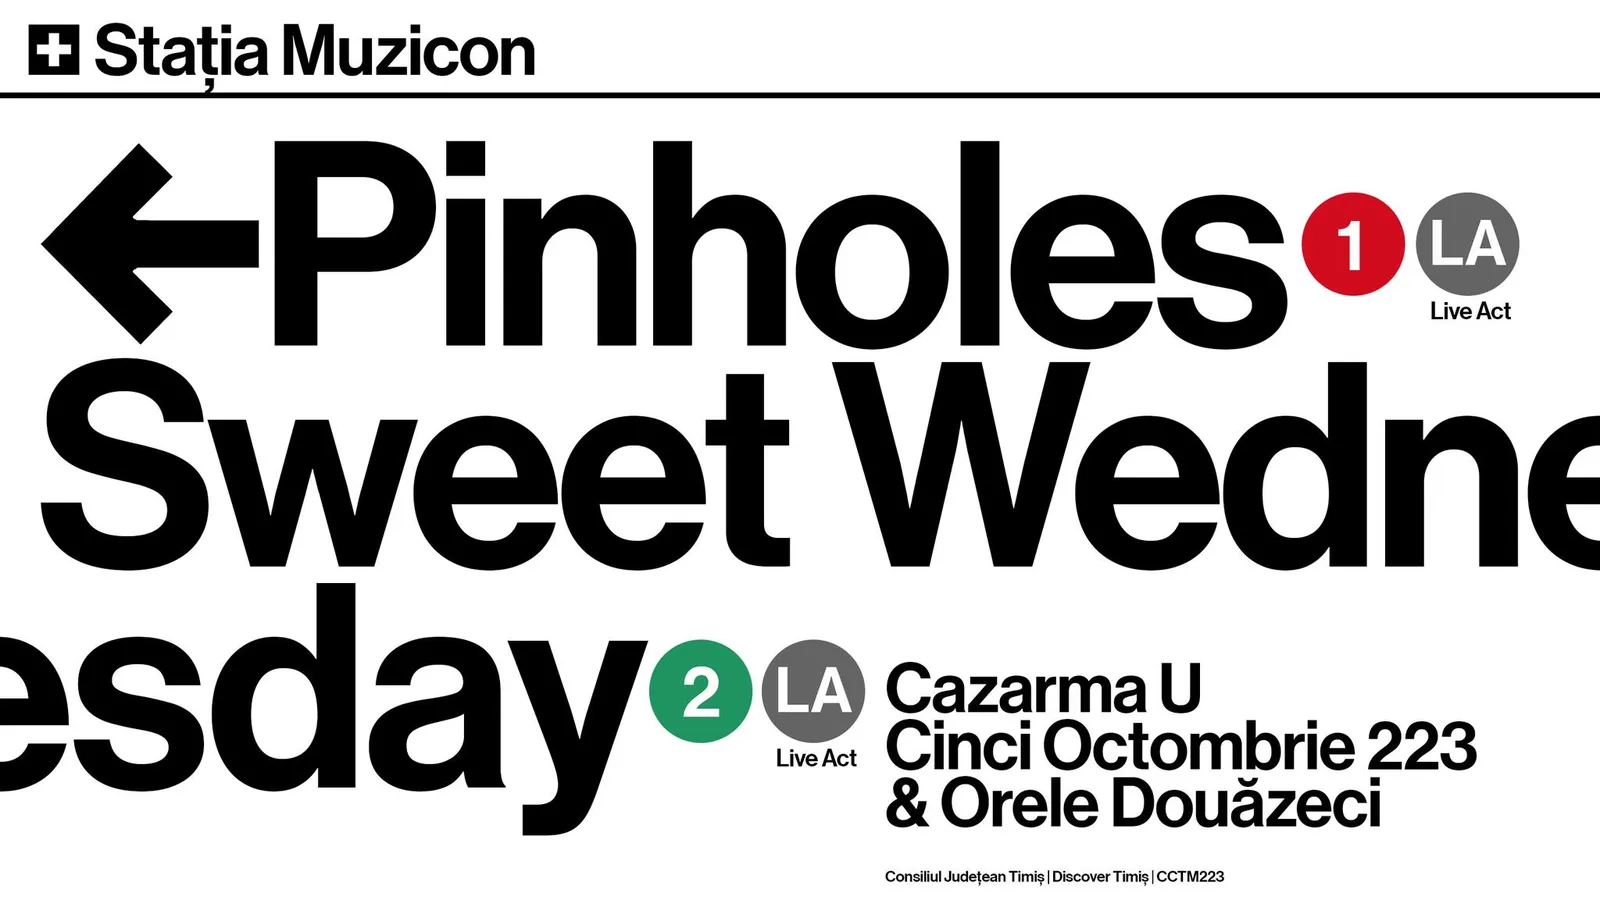 Muzicon Showcase #13 Pinholes & Sweet Wednesday Jam